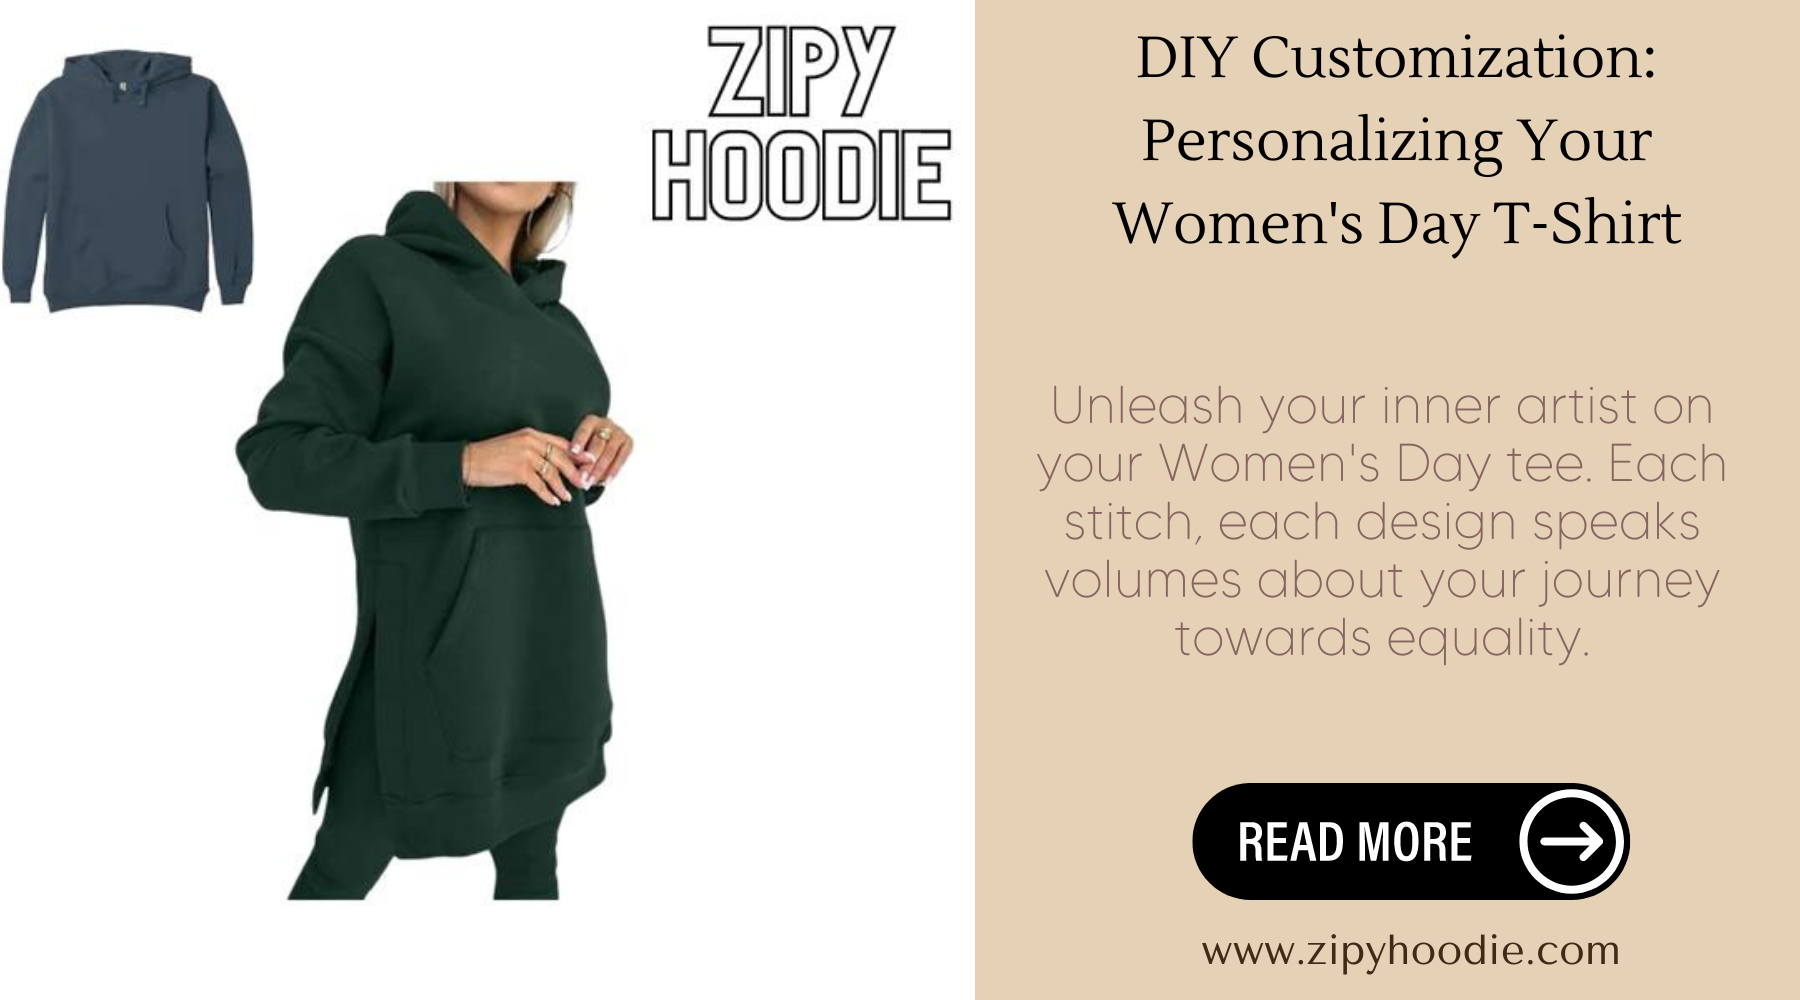 DIY Customization: Personalizing Your Women's Day T-Shirt